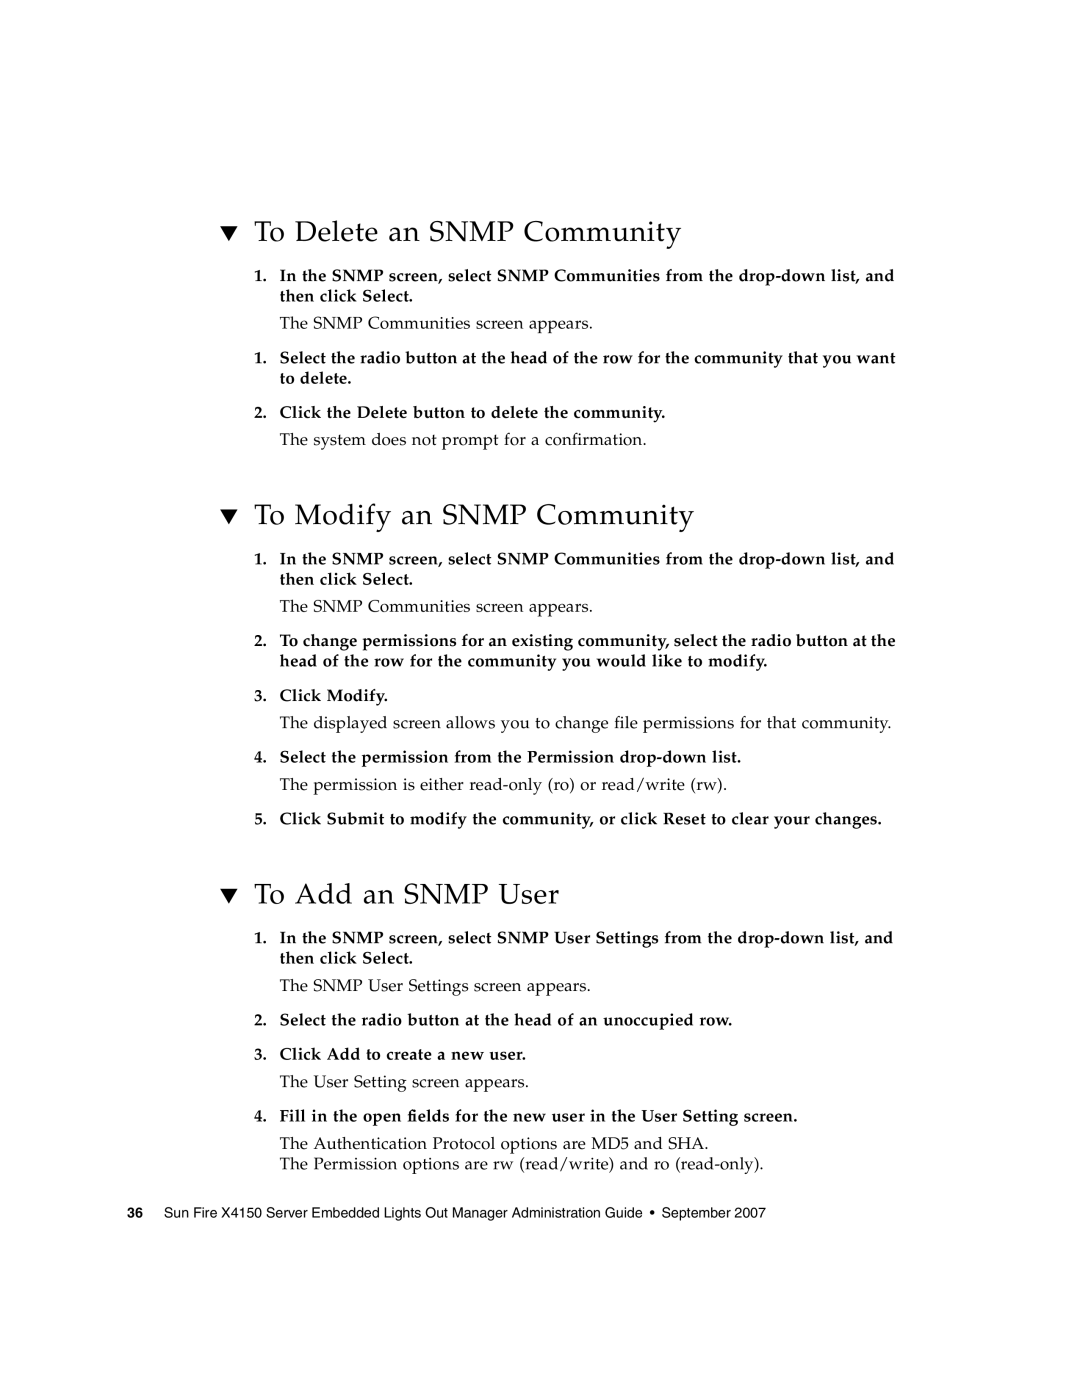 Sun Microsystems X4150 manual To Delete an SNMP Community, To Modify an SNMP Community, To Add an SNMP User 